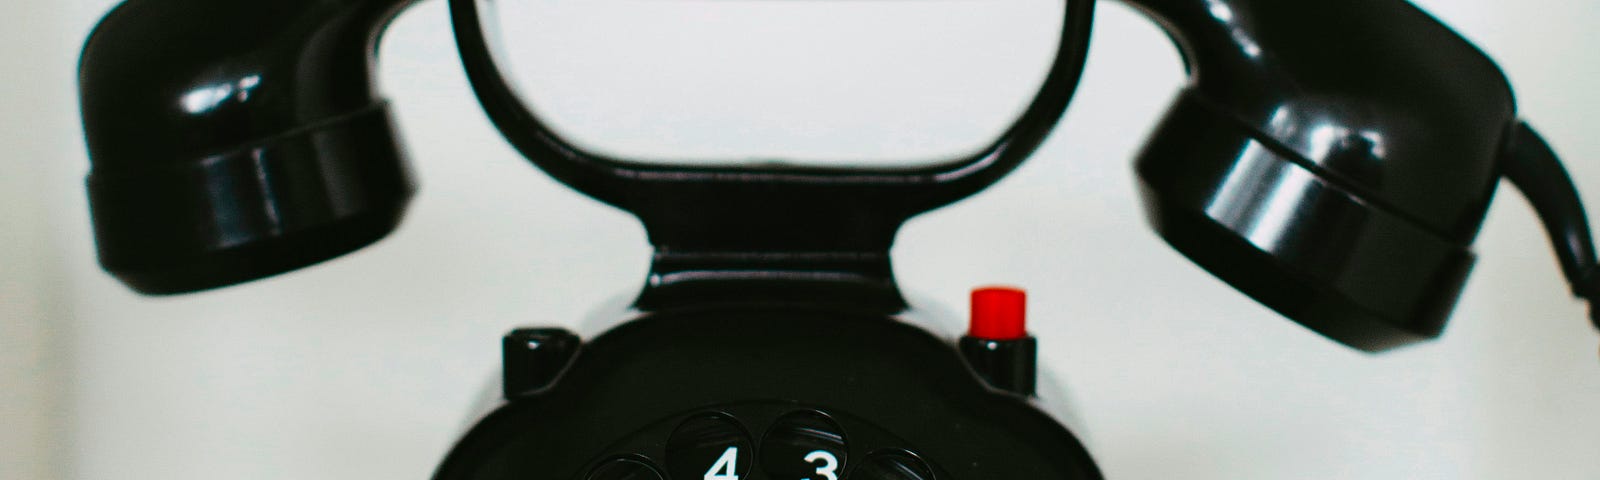 A black antique dial plate phone